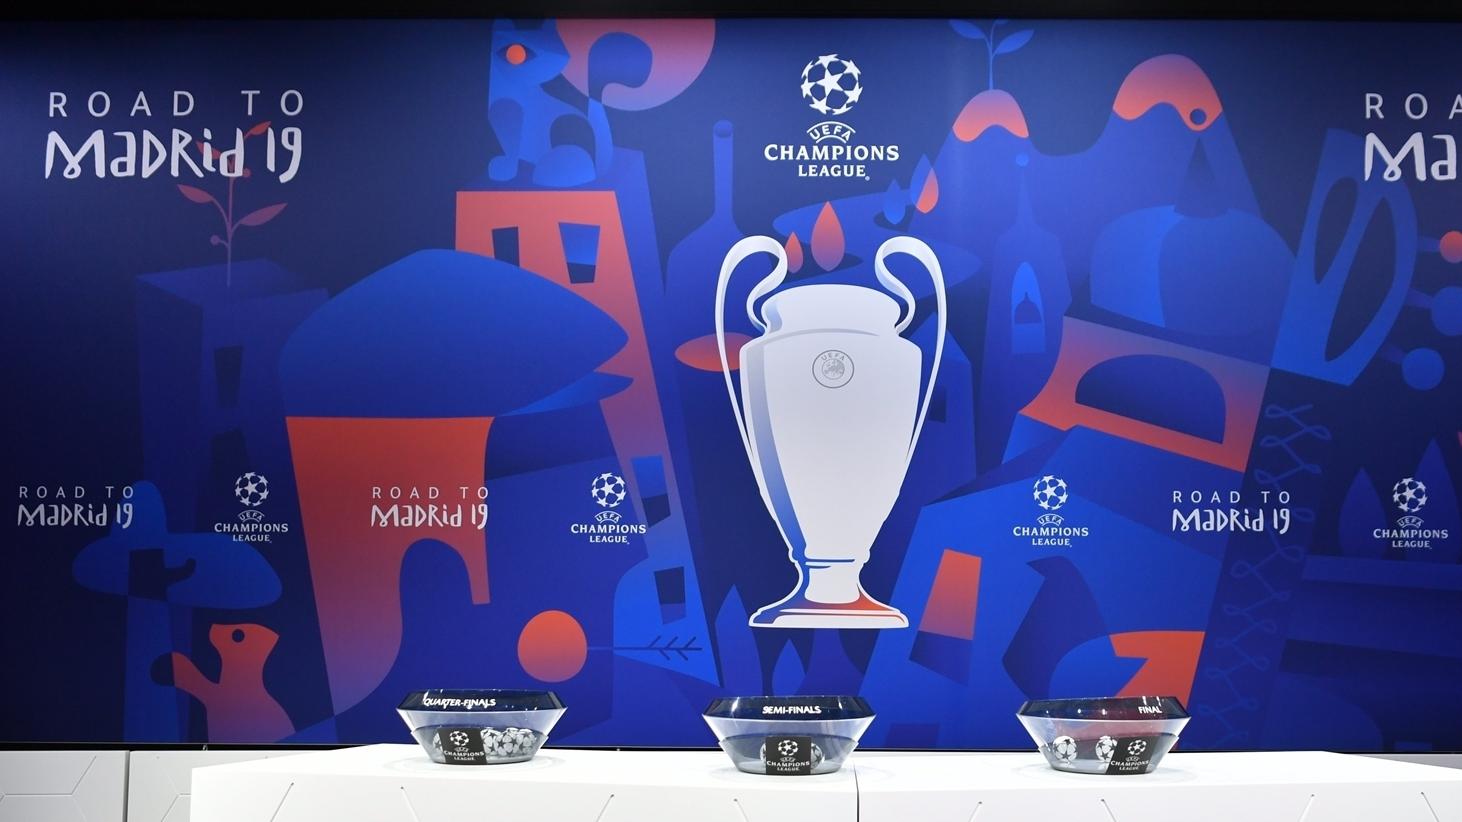 uefa champions league quarter final 2018